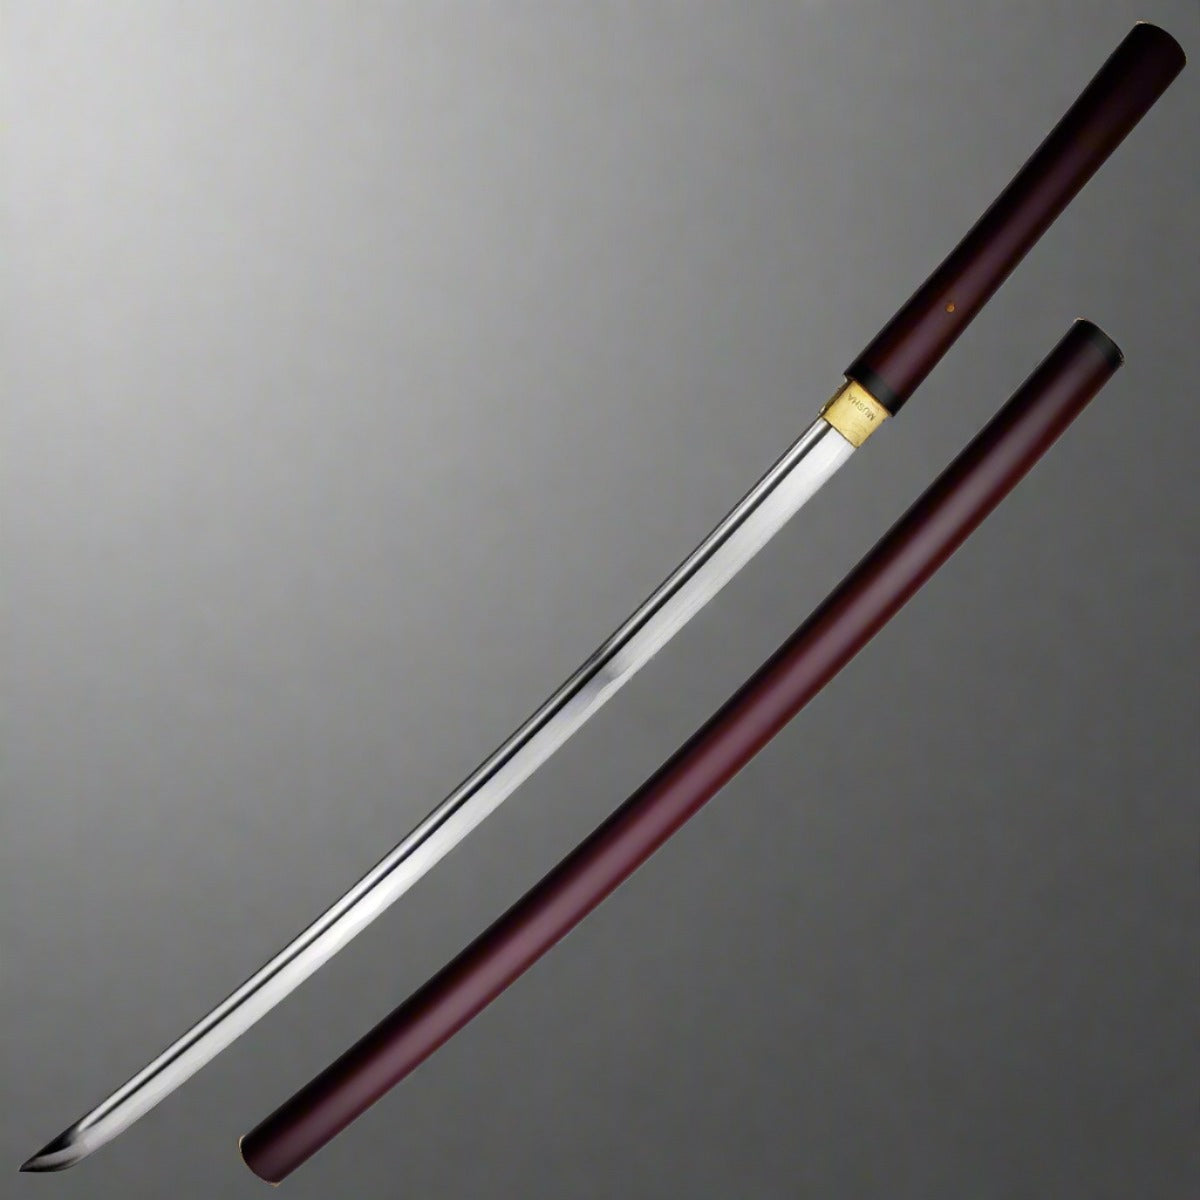 Musha Shirasaya (Burgundy) - Authentic Samurai Sword for Sale